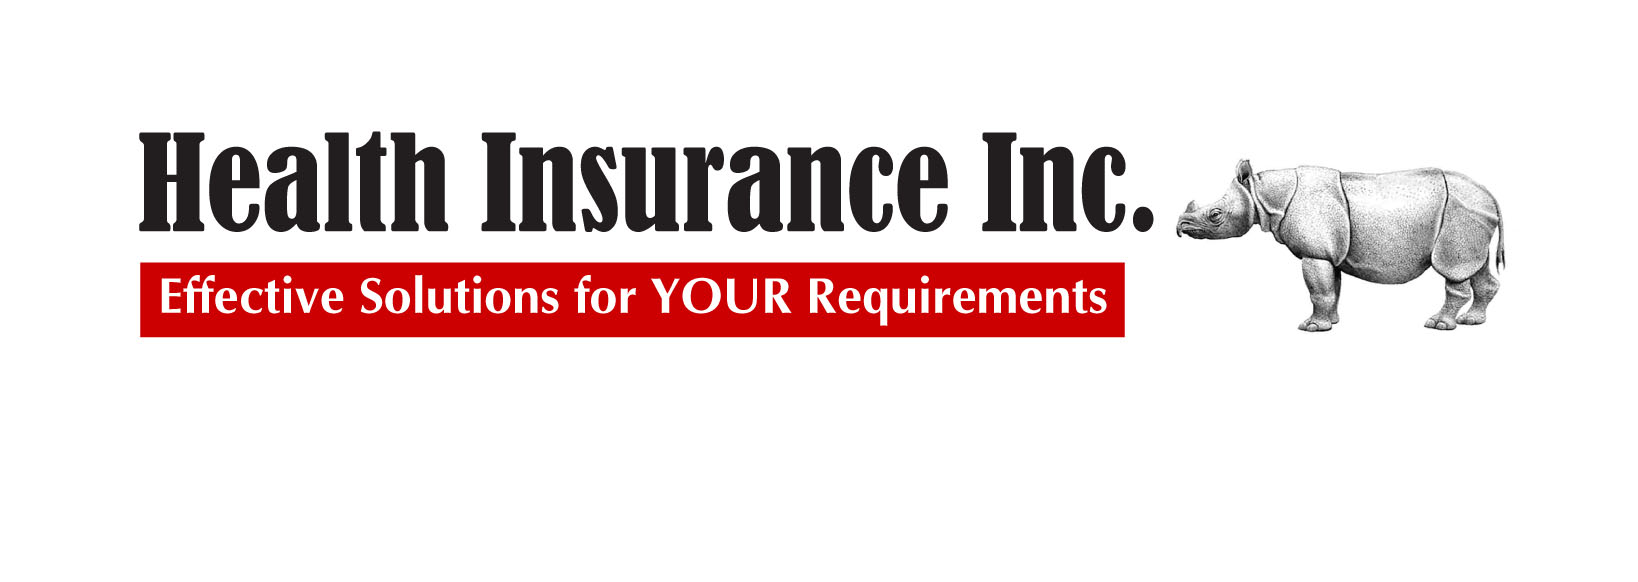 Health Insurance Inc.